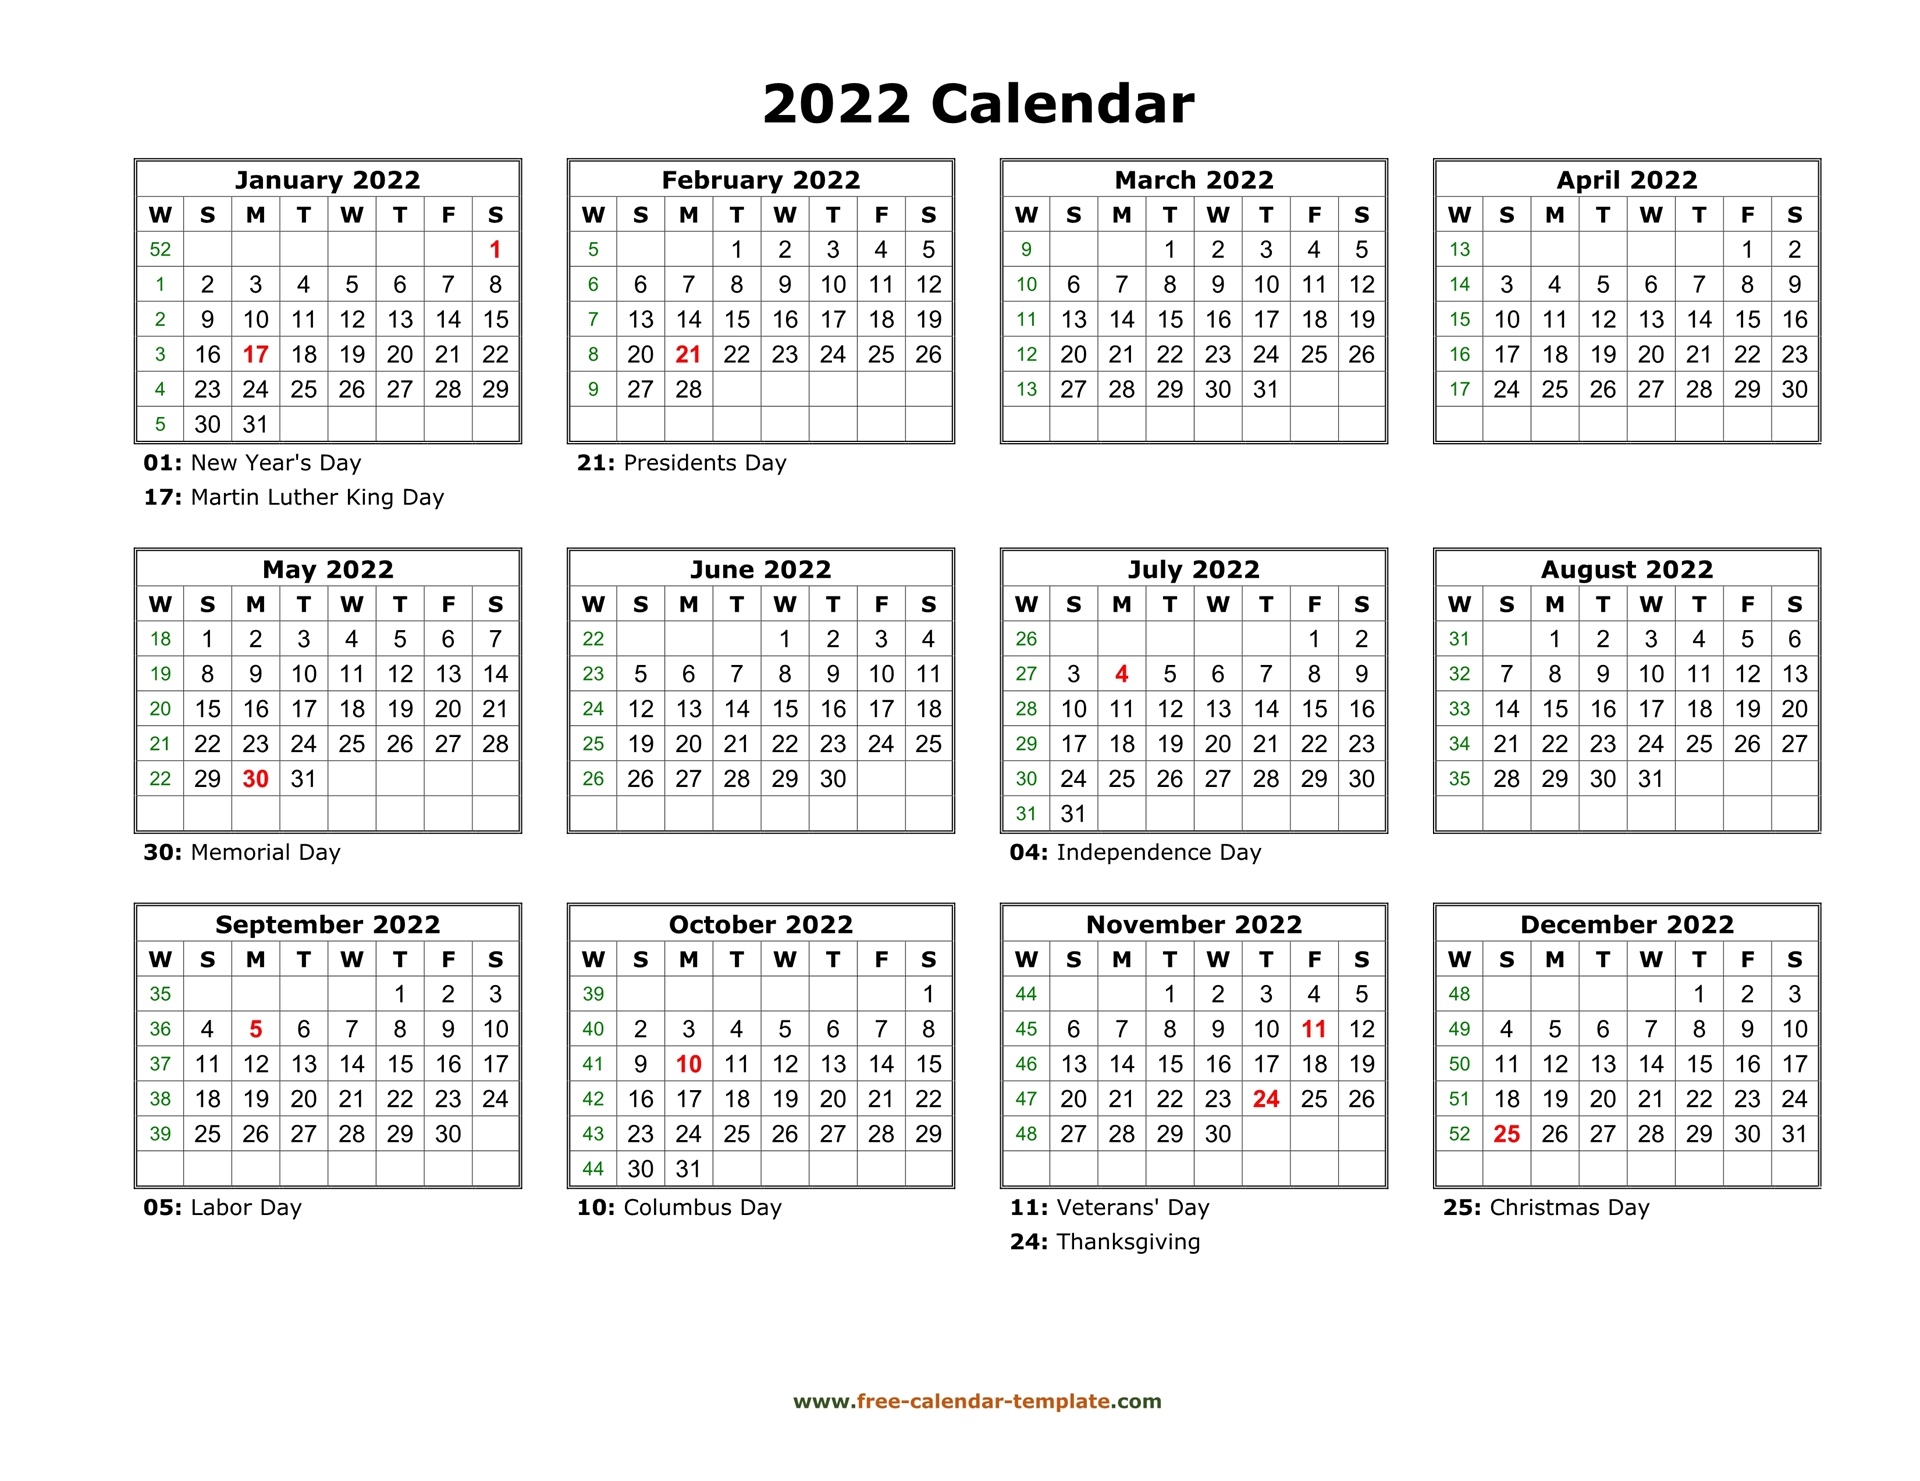 Printable Yearly Calendar 2022 | Free-calendar-template.com